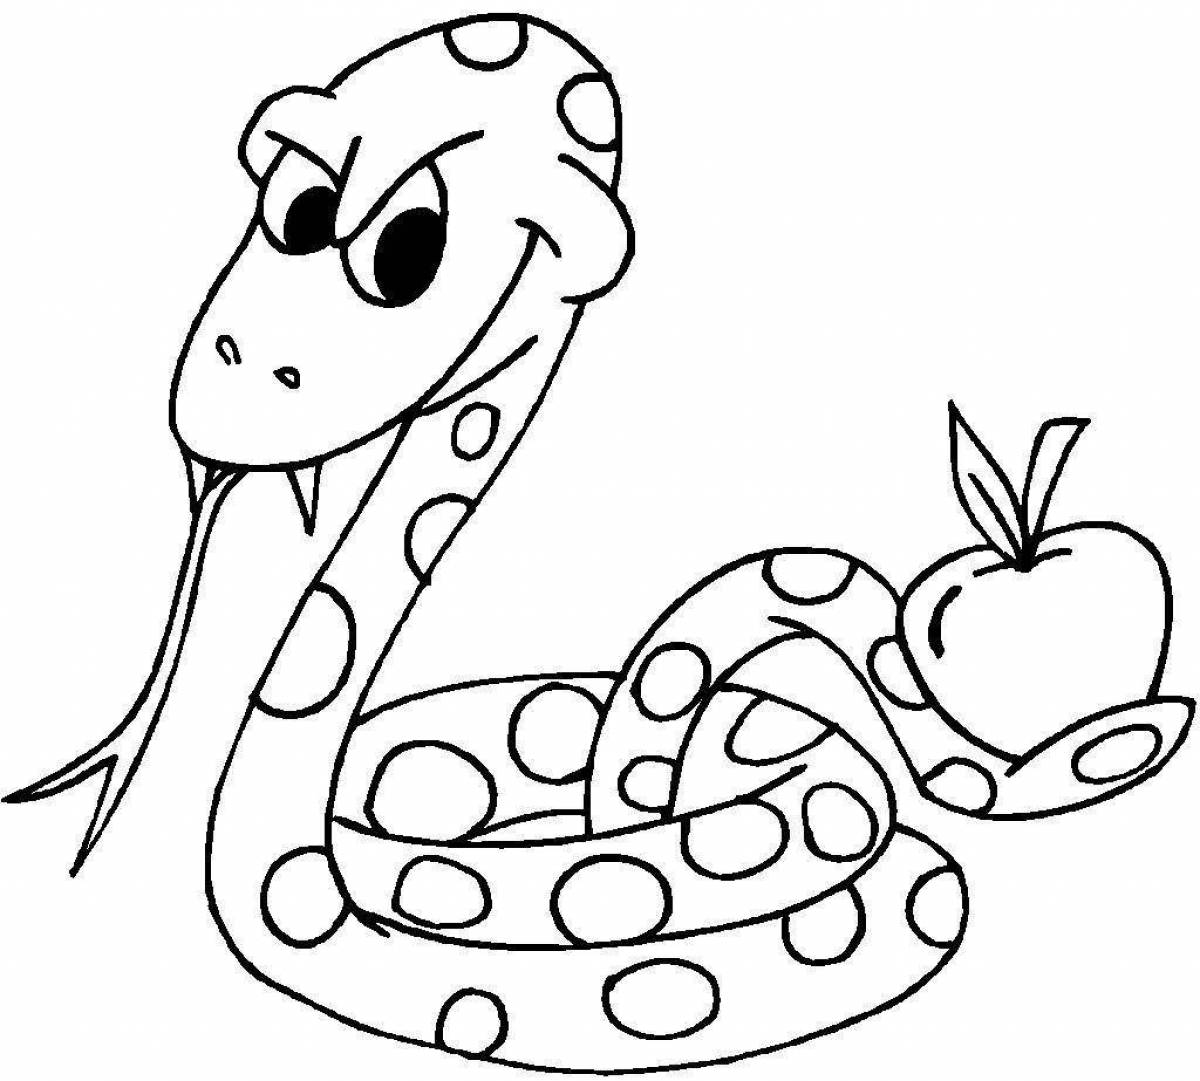 Fun python coloring